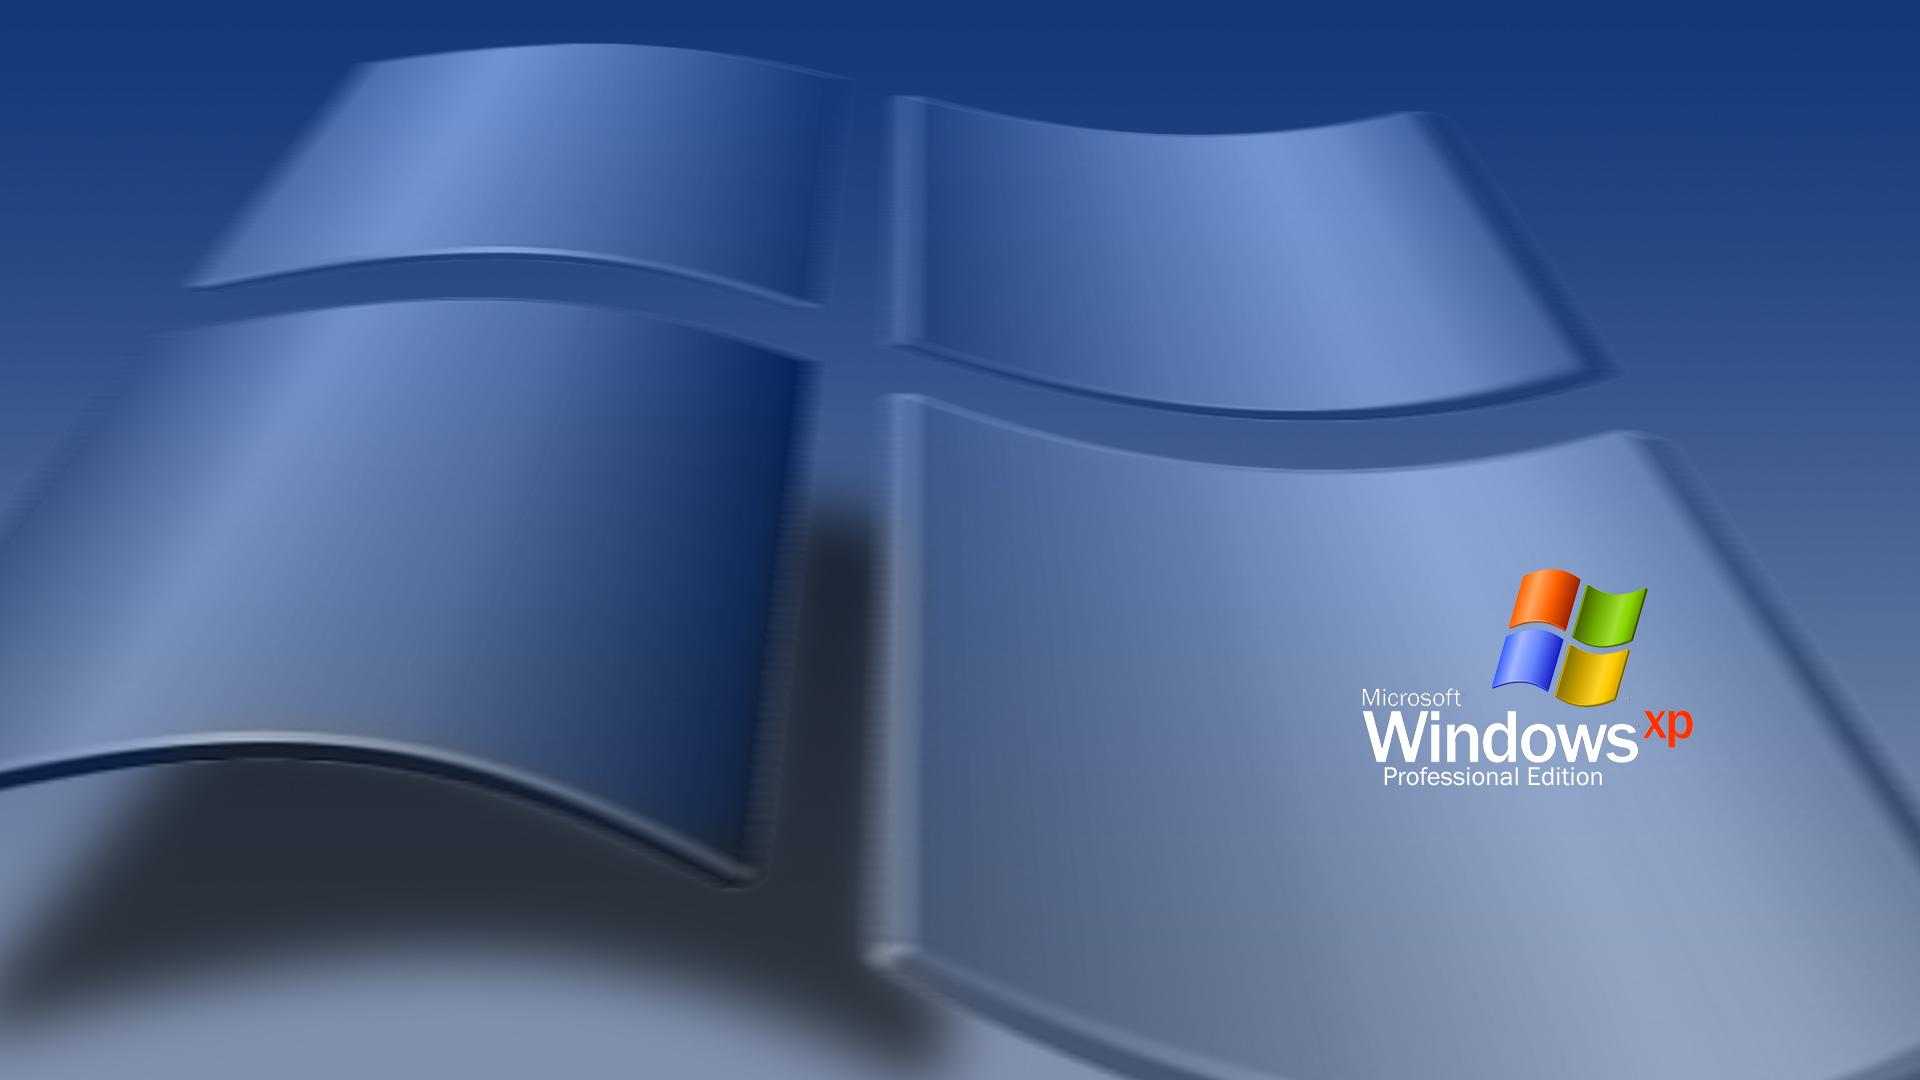 Microsoft Windows Xp Professional Wallpaper Top